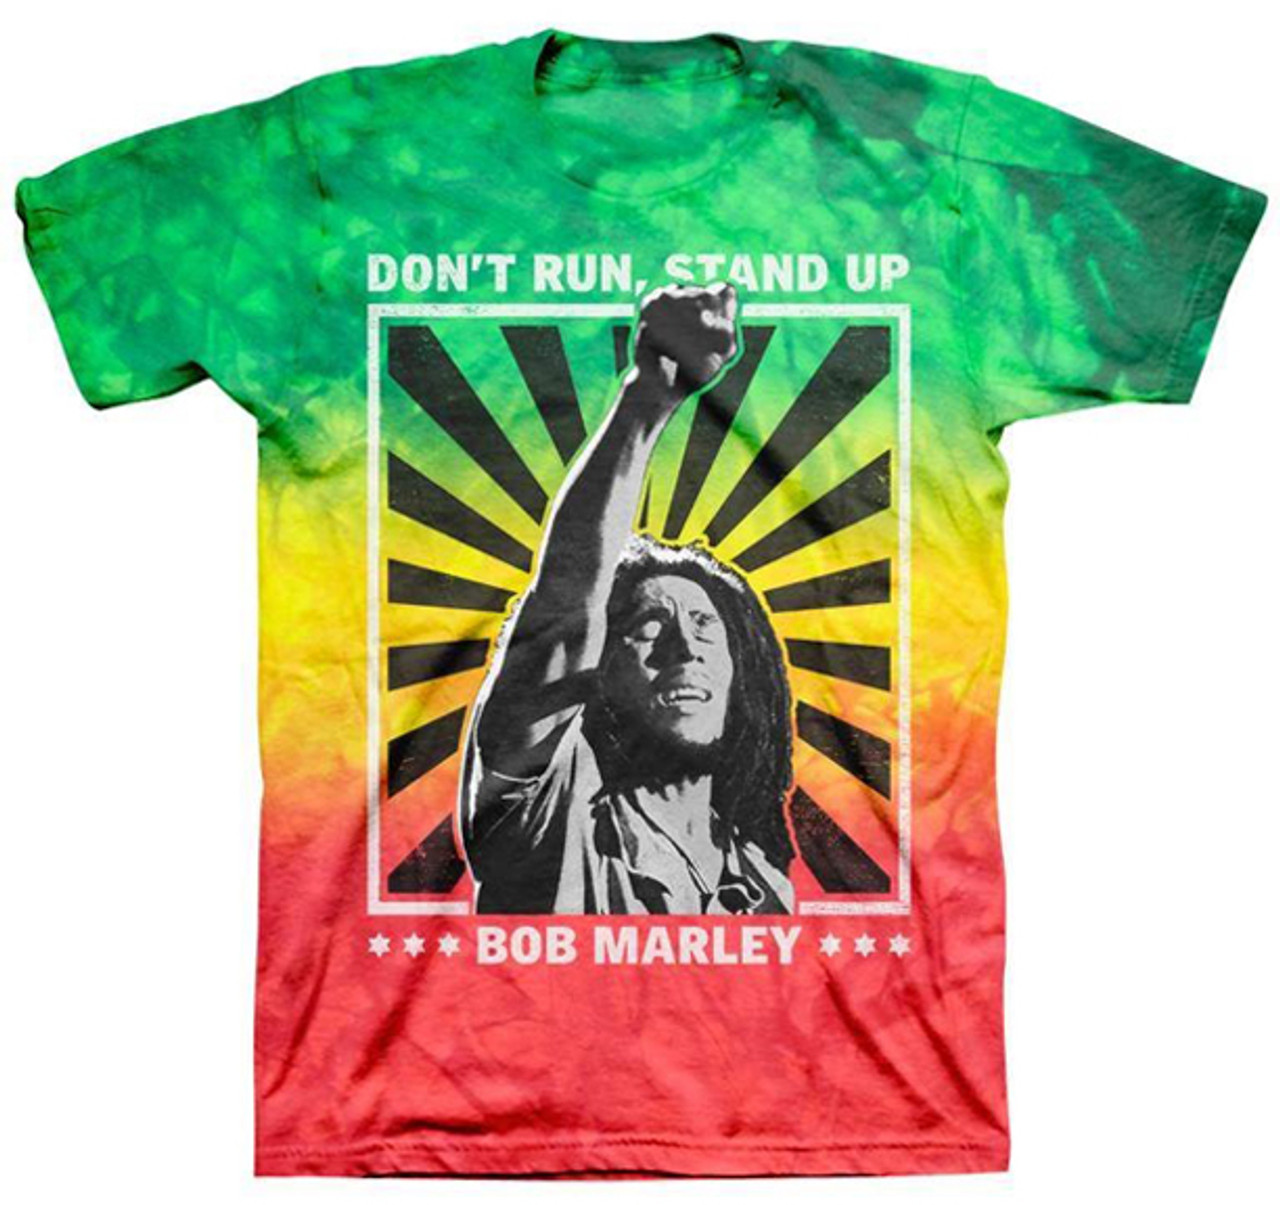 Bob Marley Don't Run|Stand Up Tie Dye T-Shirt*